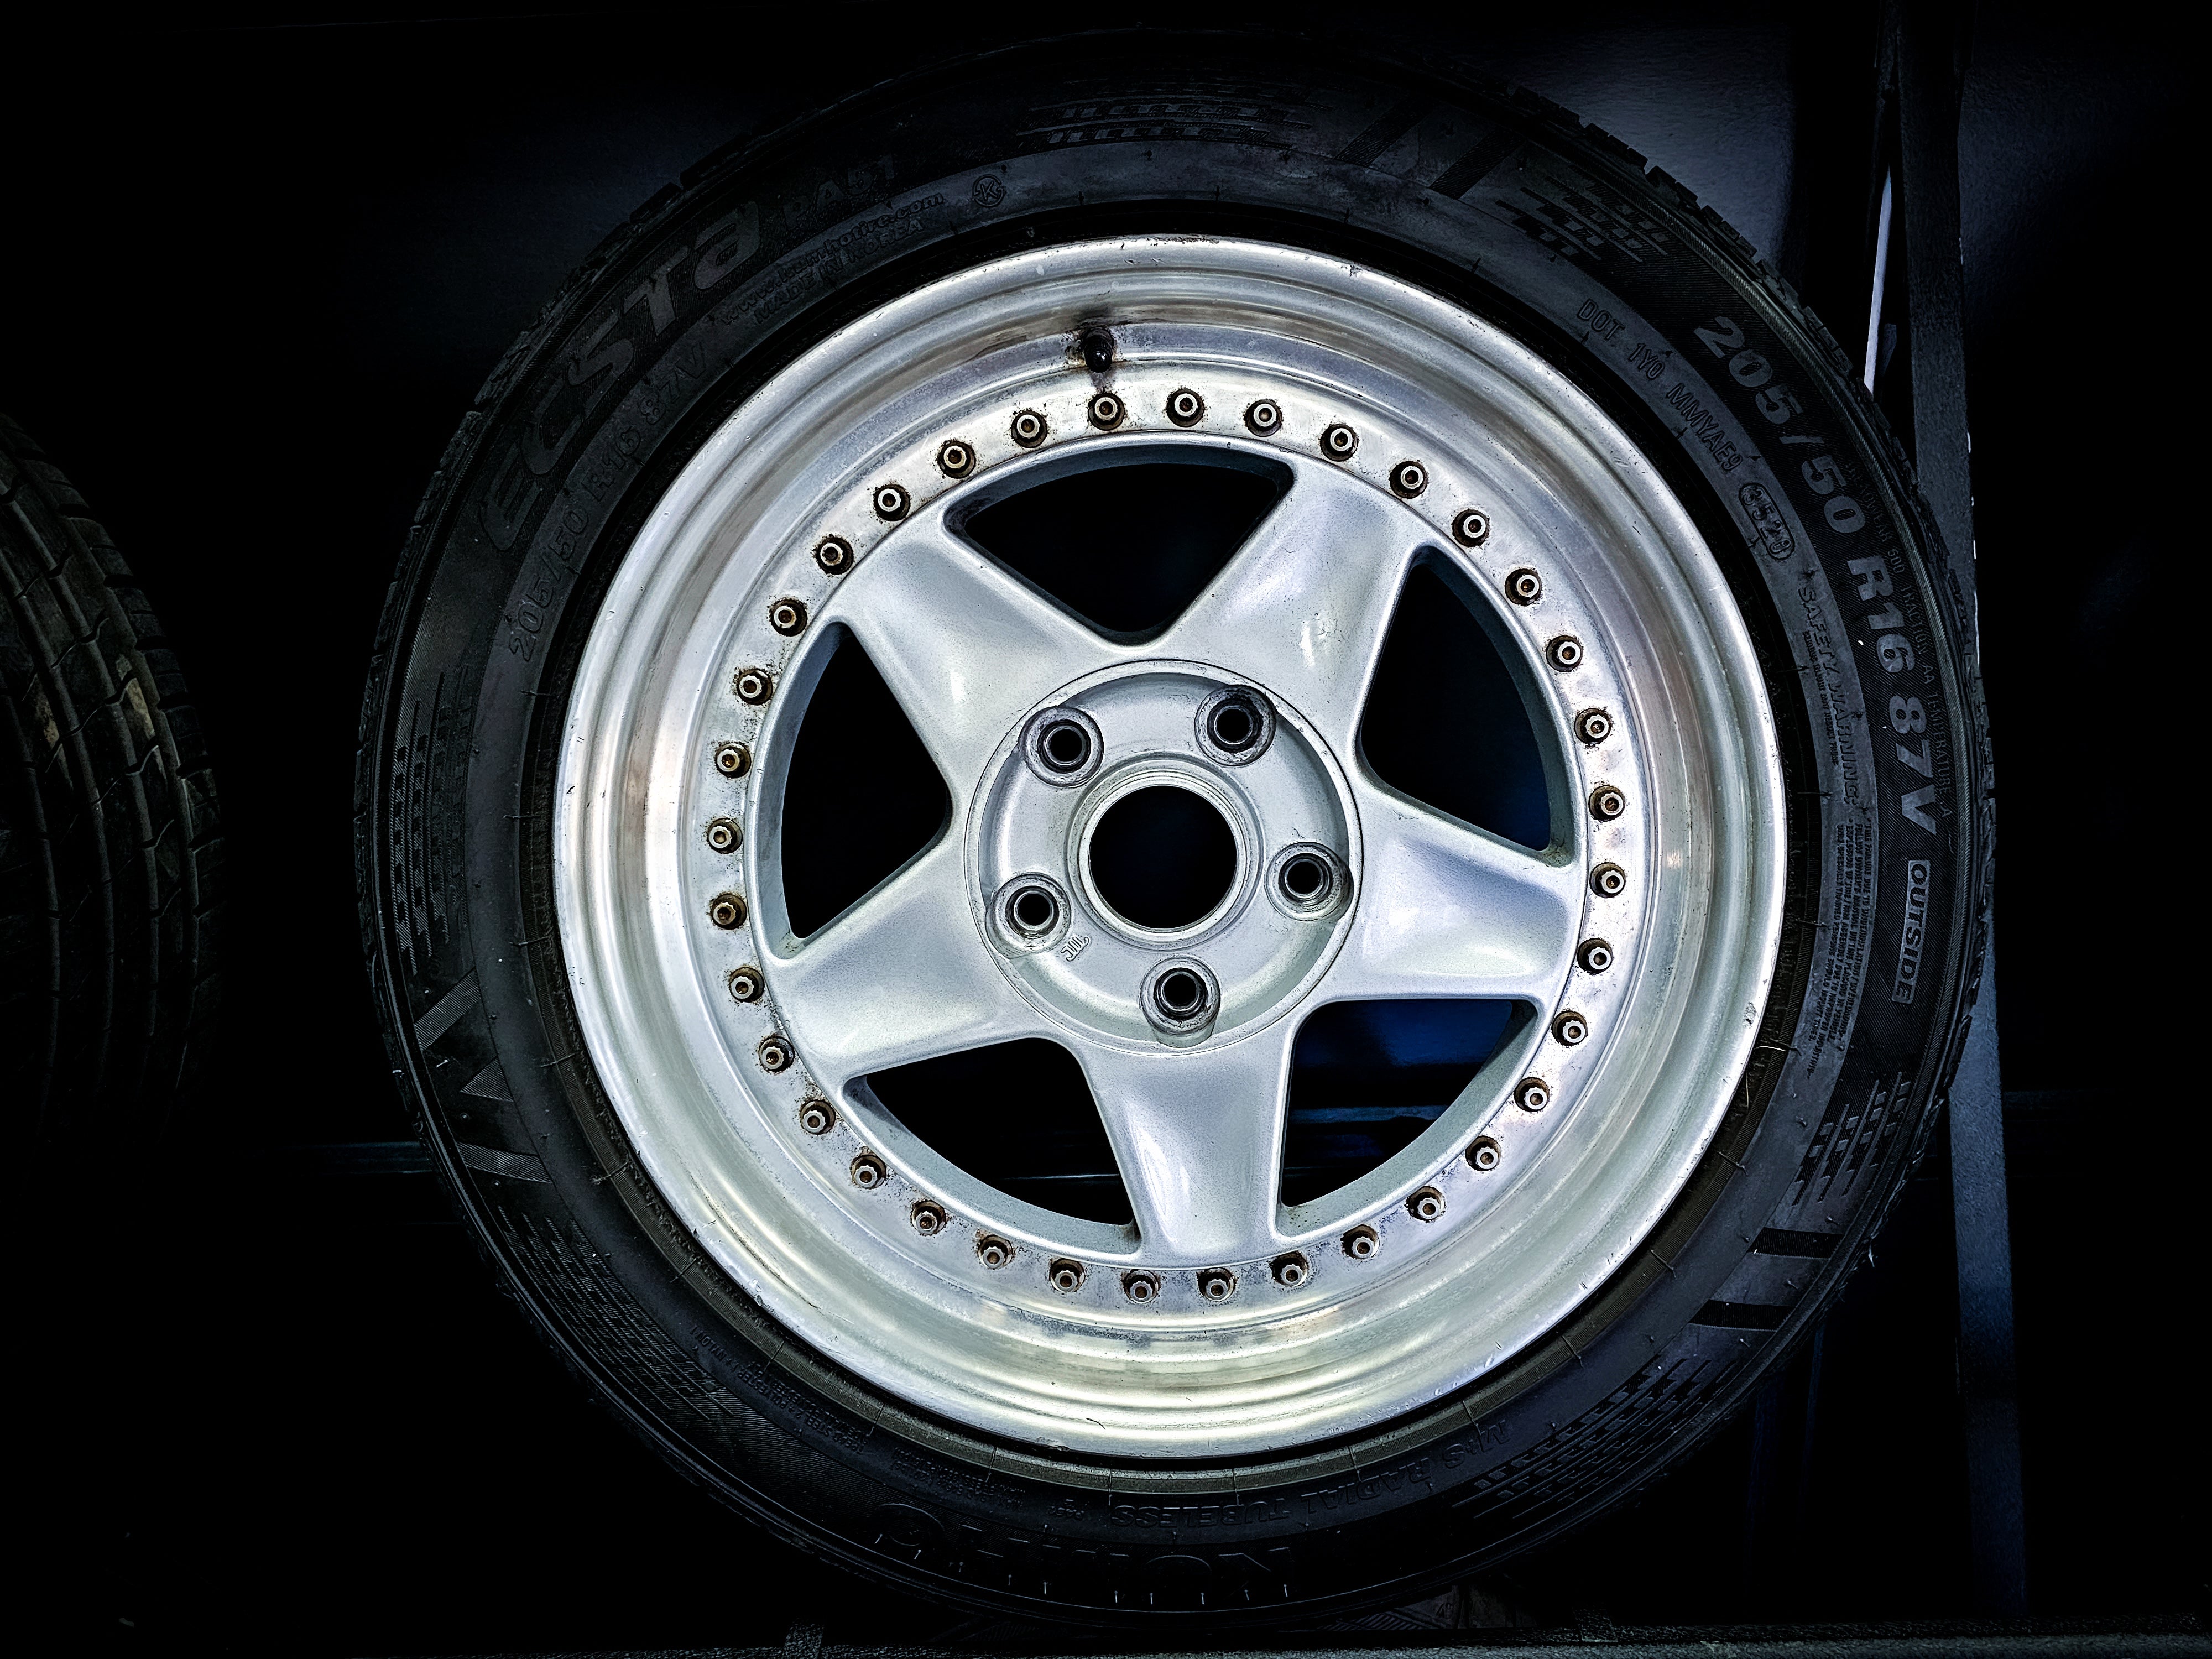 16" Monza Speed Beka 3 Piece Polished Lipped Wheels x 4